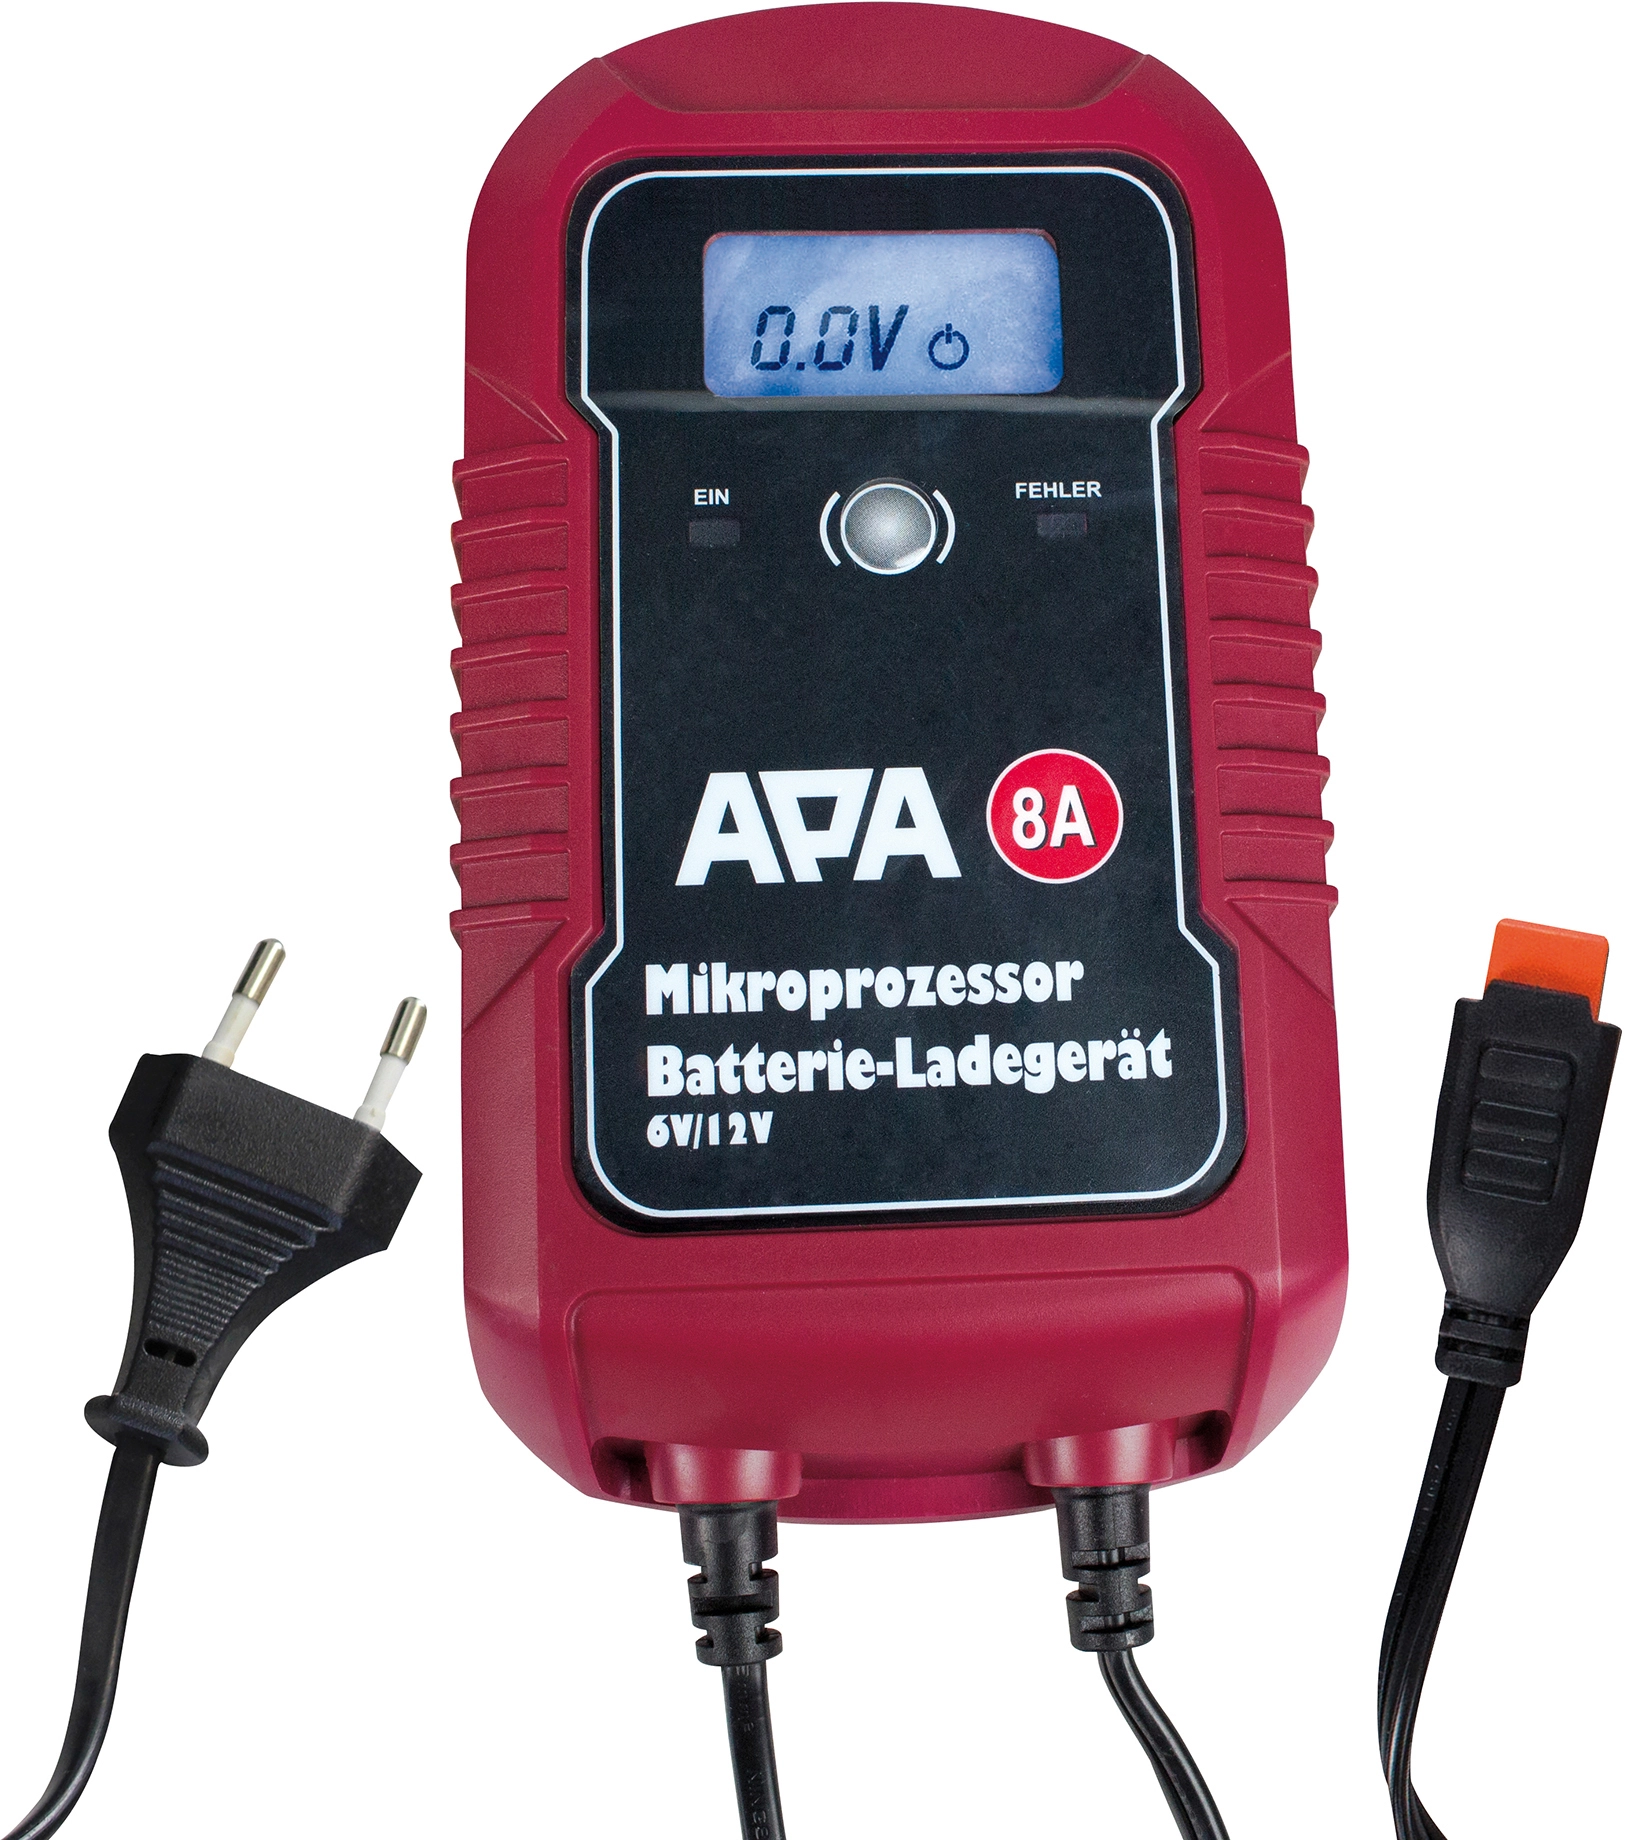 APA Mikroprozessor Batterieladegerät 6 V/12 V 8 A kaufen bei OBI